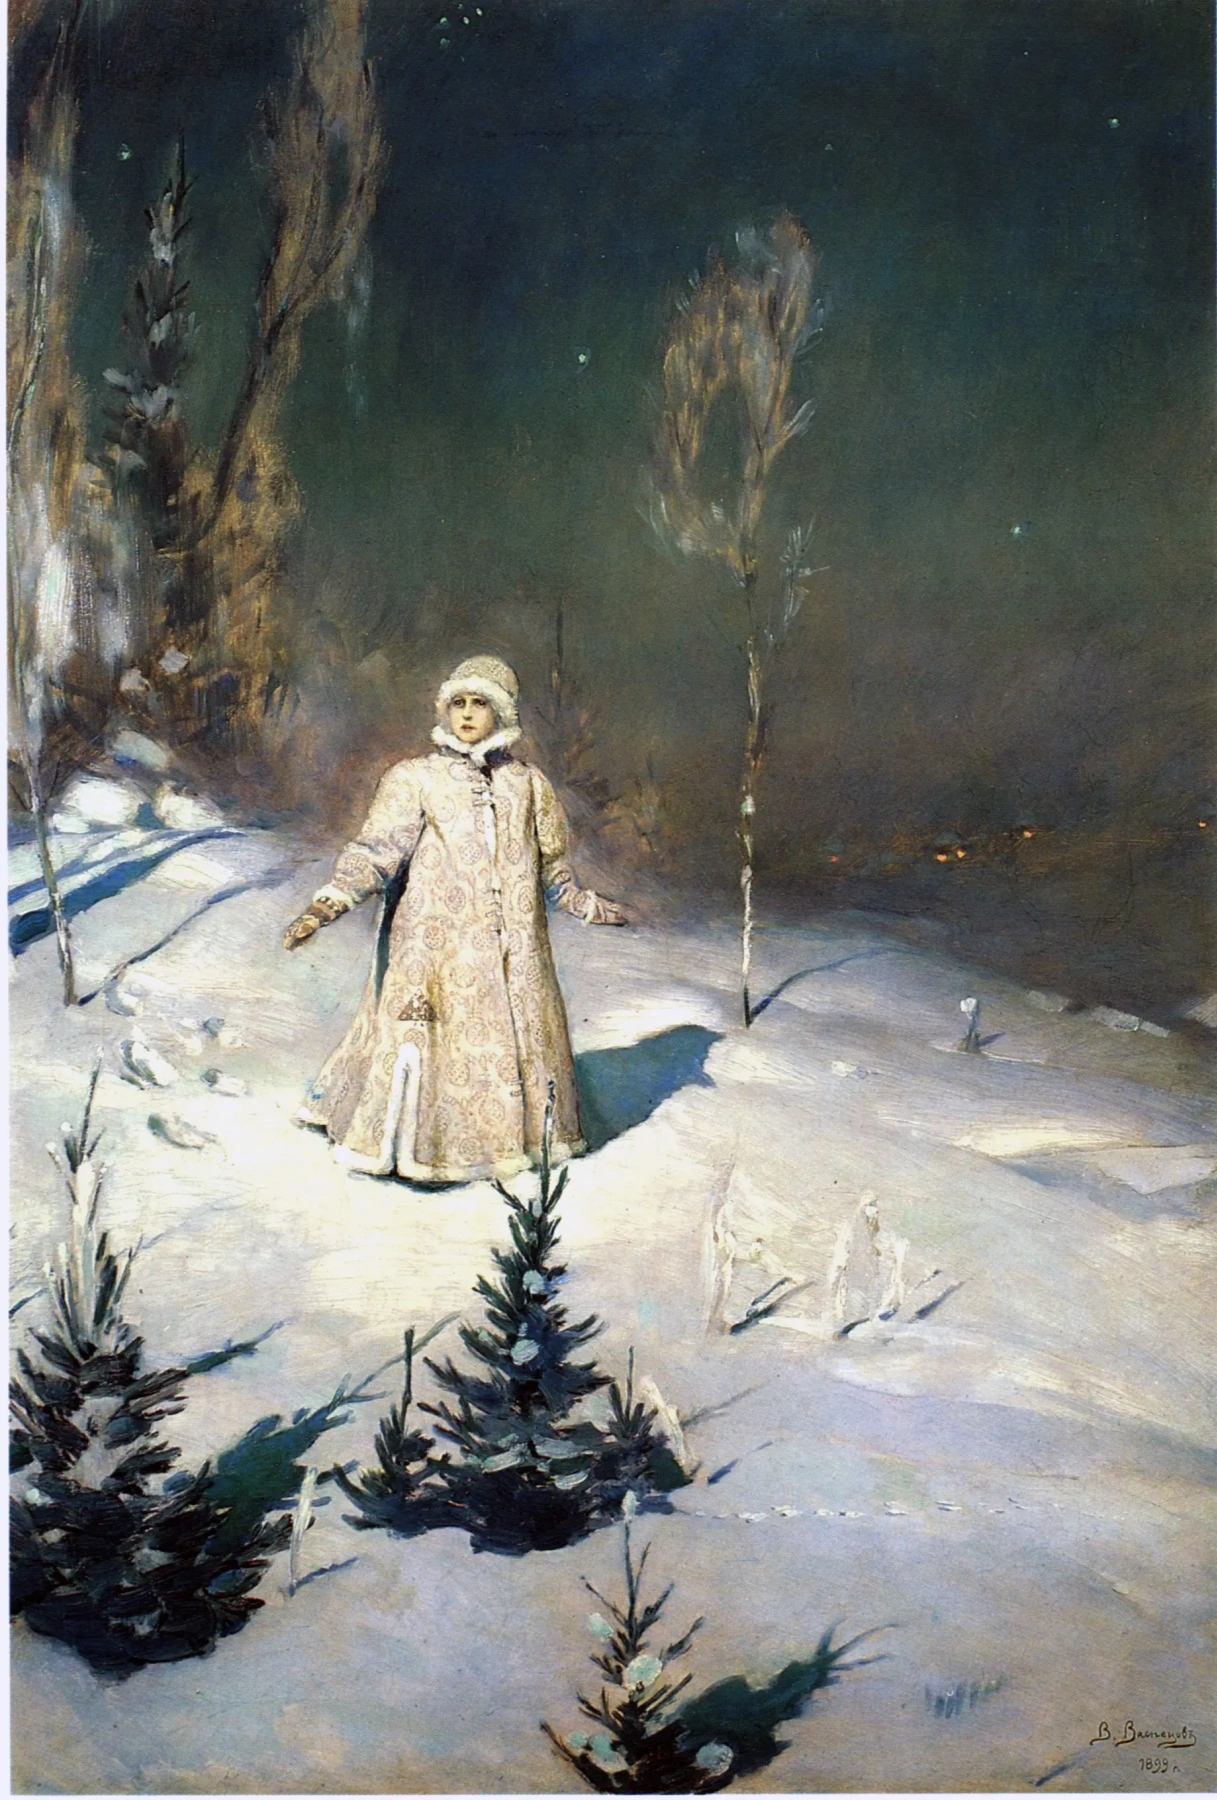 Enchanting World of the Russian Tale: Viktor Vasnetsov, The Snow Maiden, 1899, Tretyakov Gallery, Moscow, Russia.